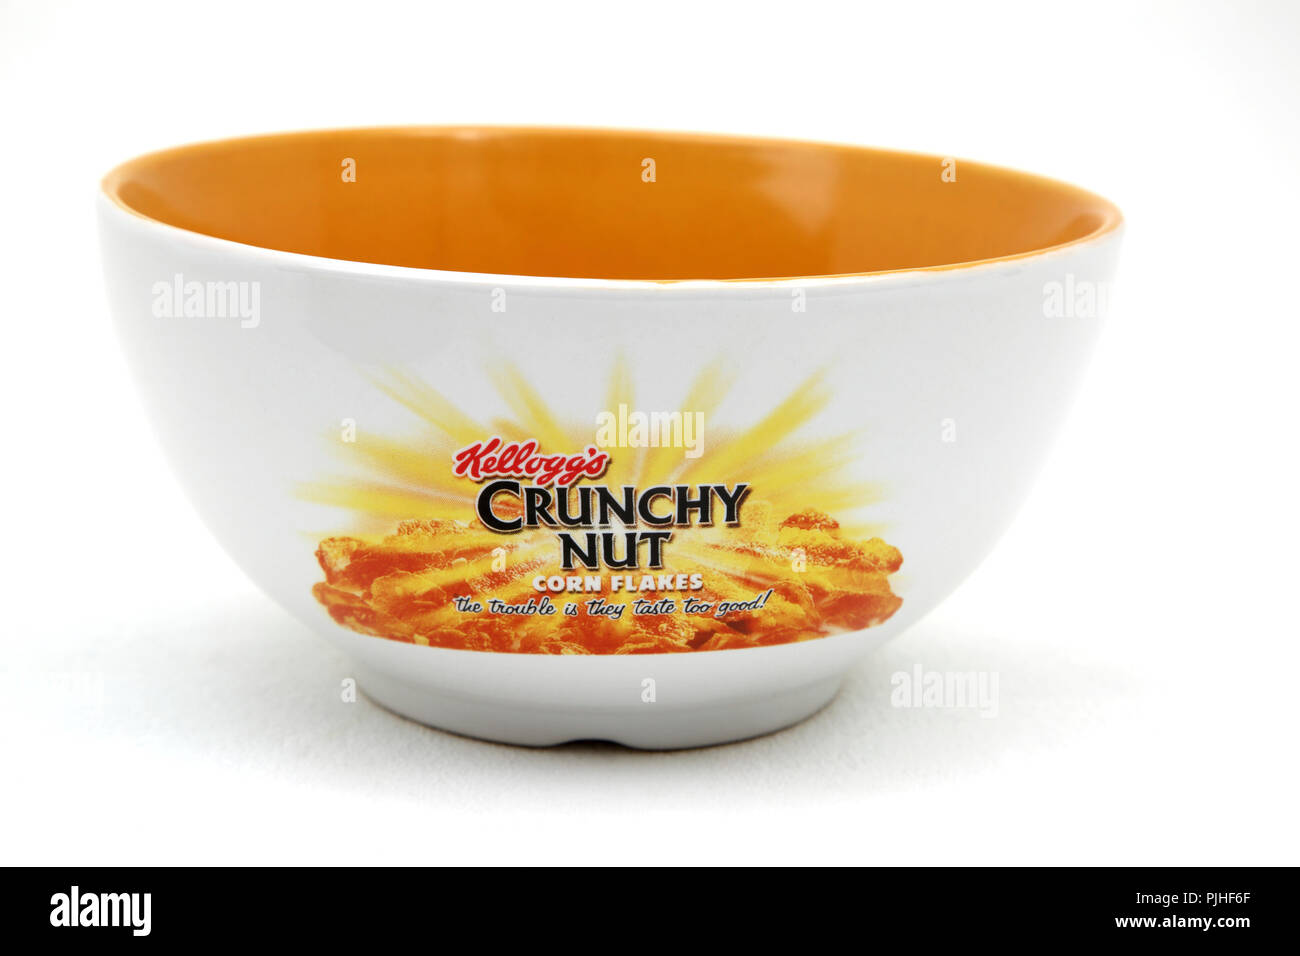 Kellogg's Crunchy Nut Cornflakes Promotional Bowl Stock Photo